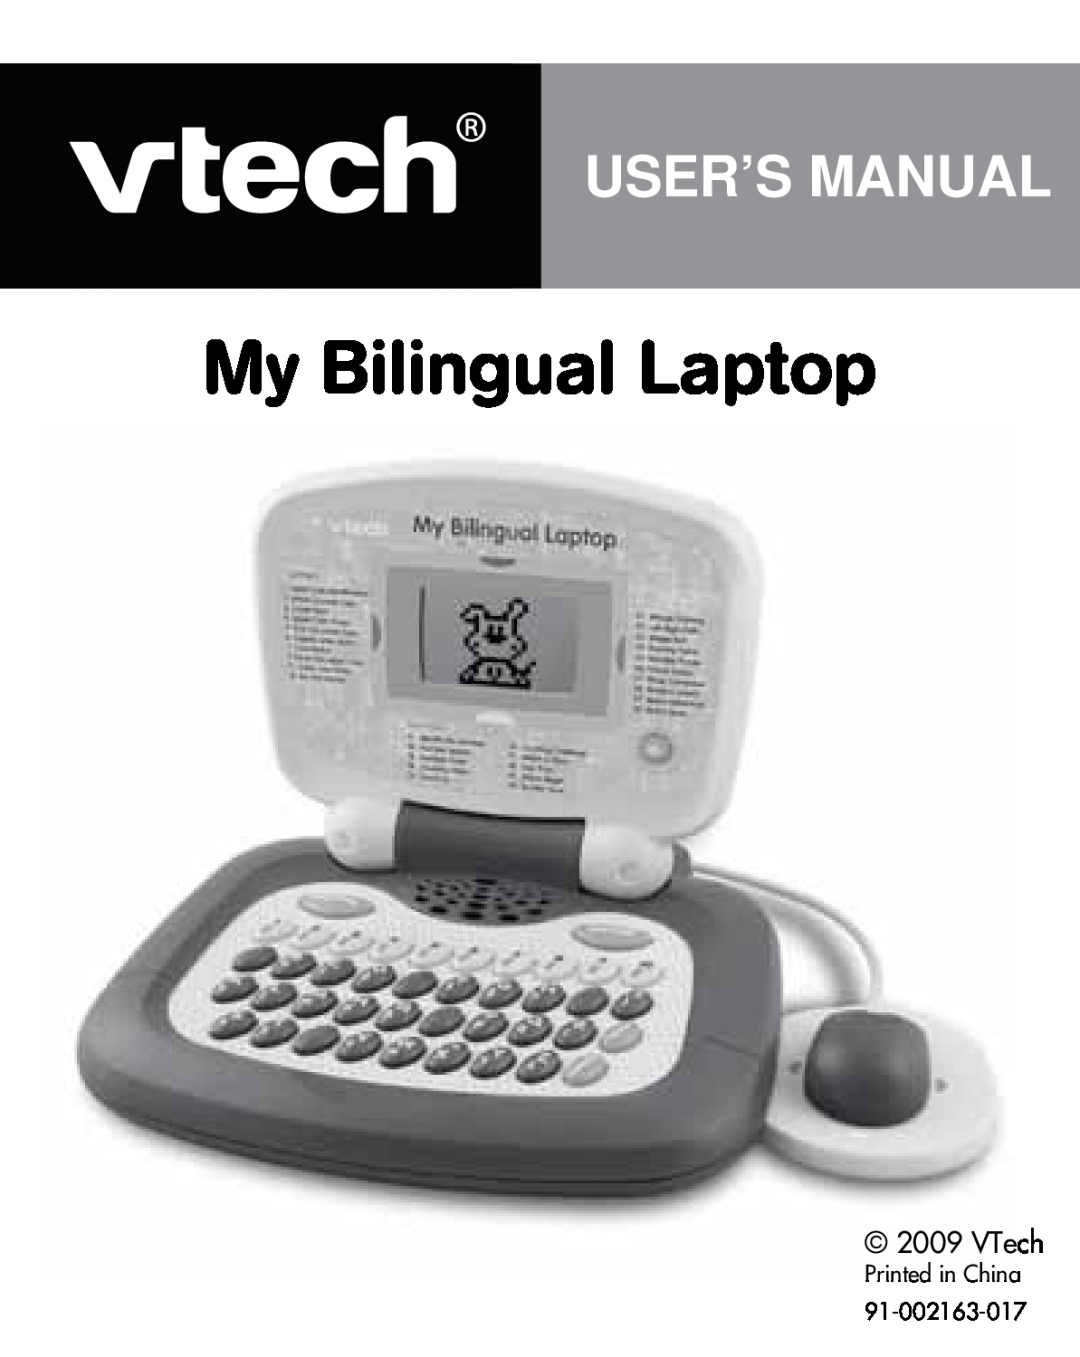 VTech 80-067848 user manual My Bilingual Laptop, User’S Manual, Printed in China 